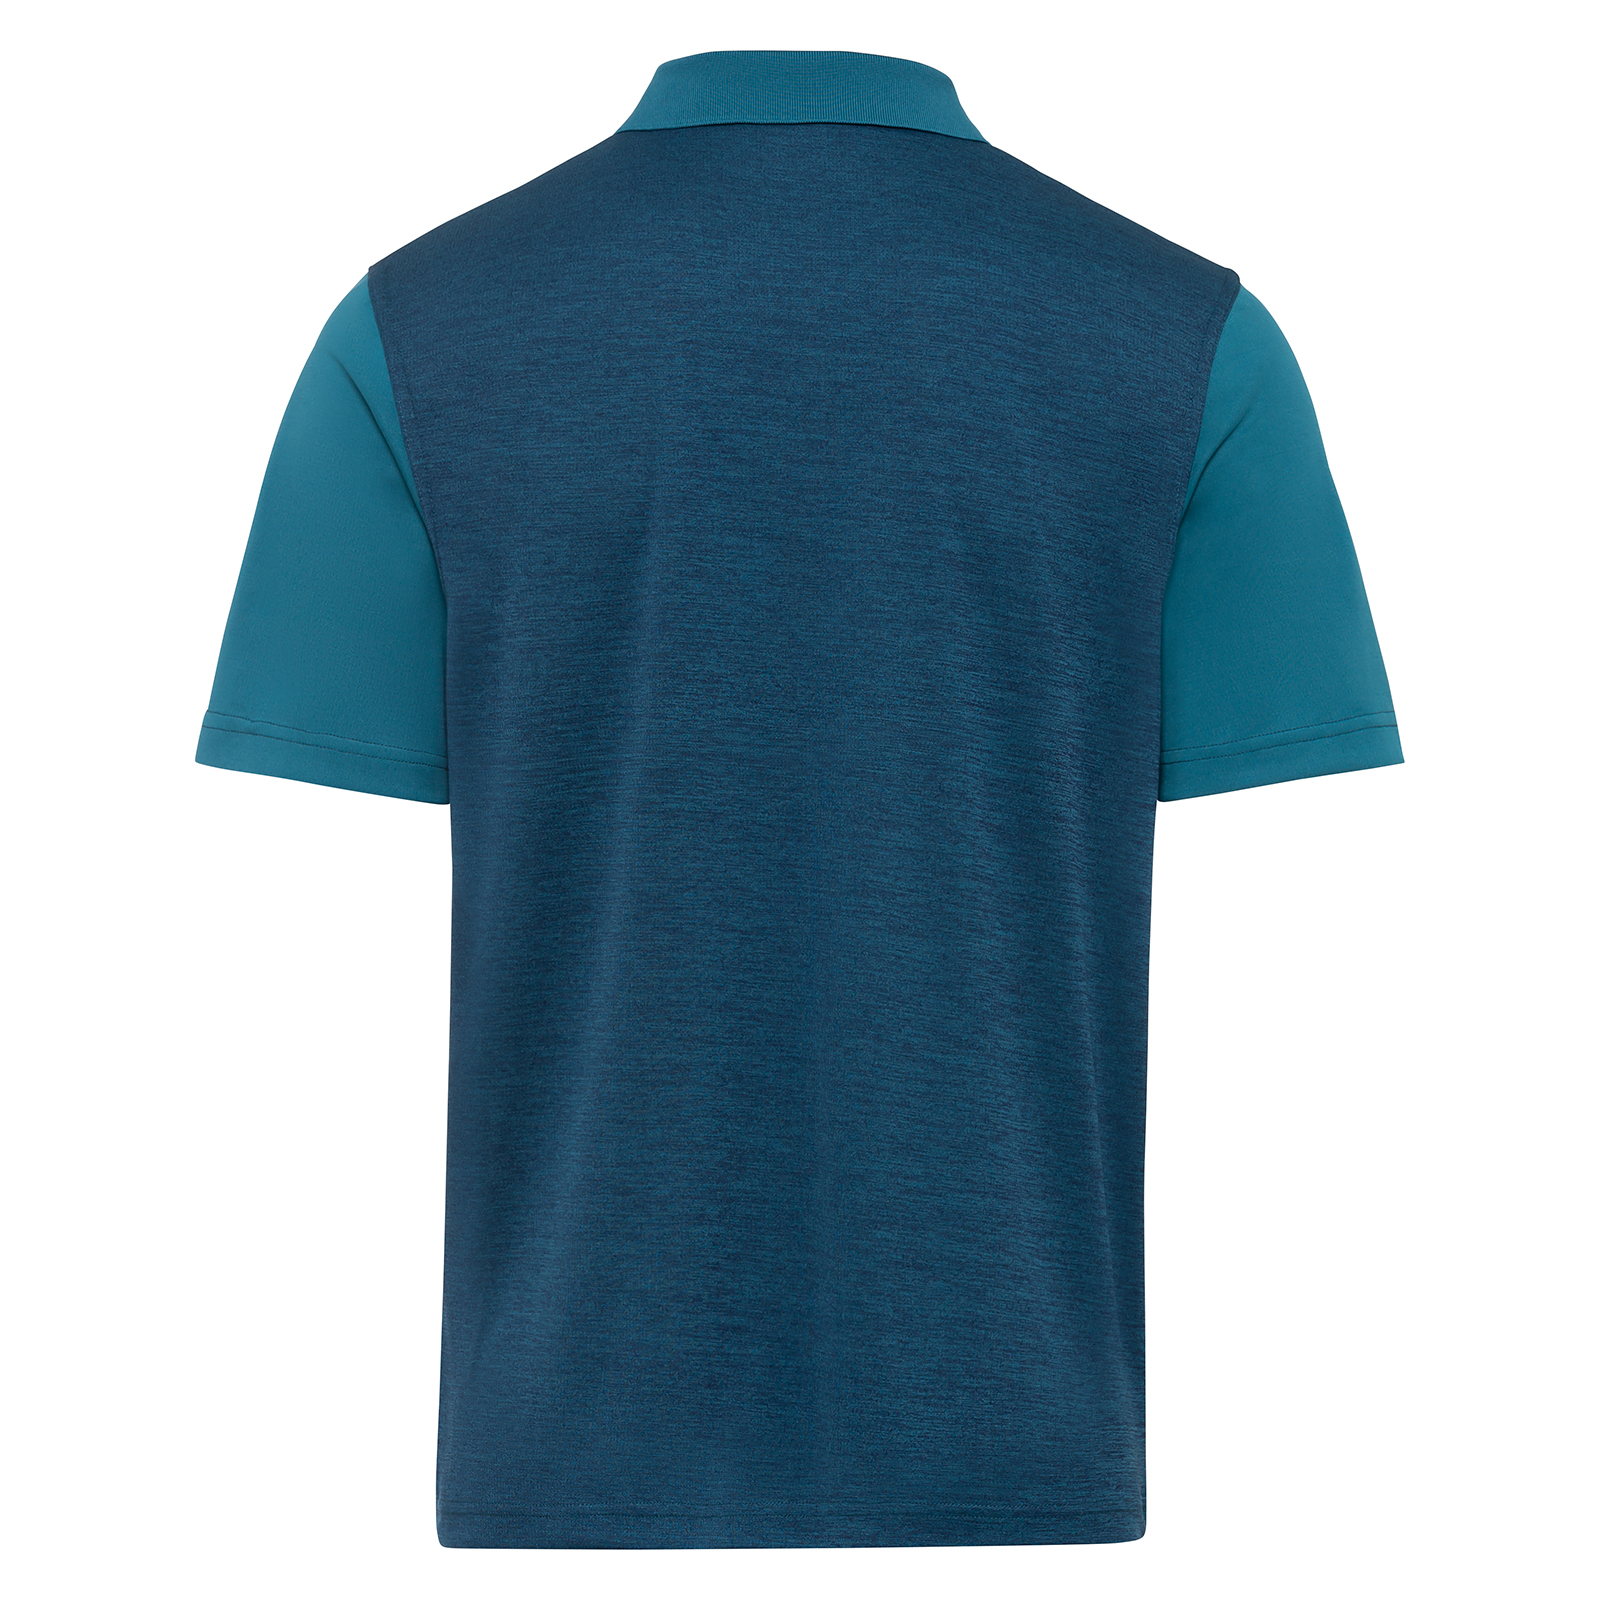 Men's quick dry golf polo shirt